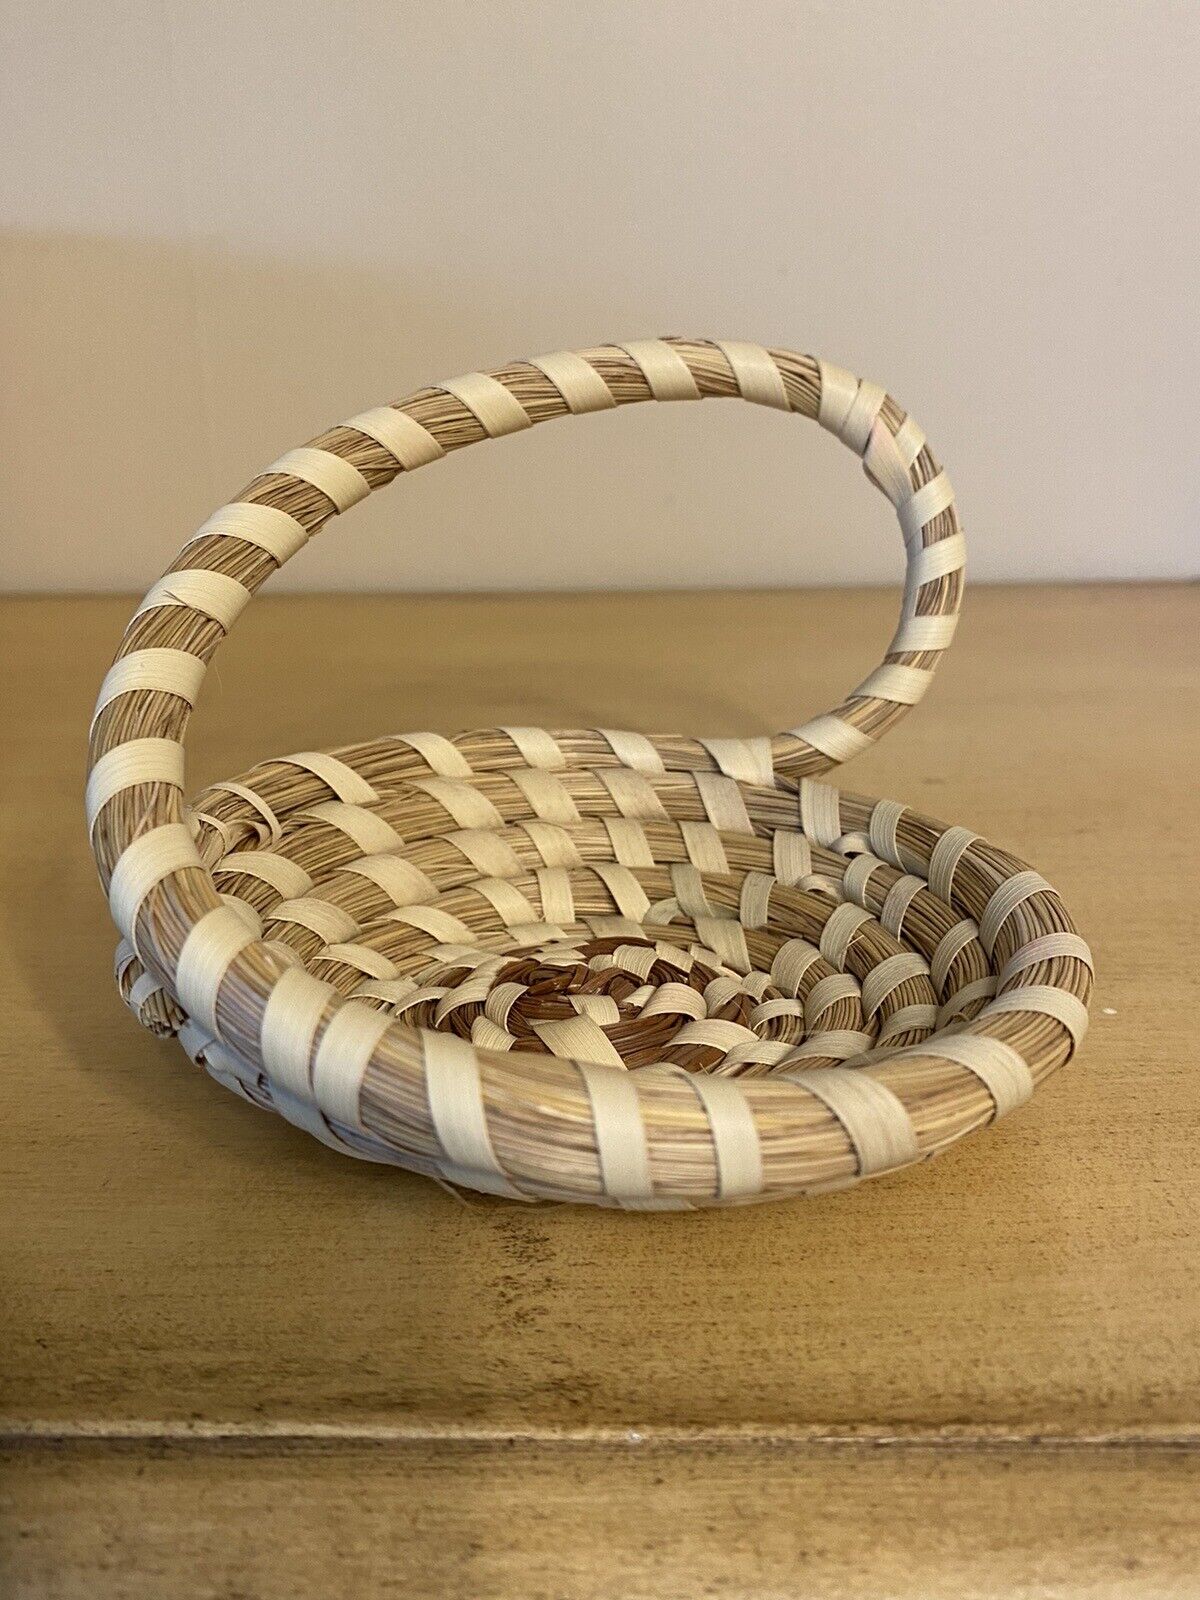 Sweetgrass South Carolina Gullah Mini Handmade Tight Weave Coiled Basket 4.5”D